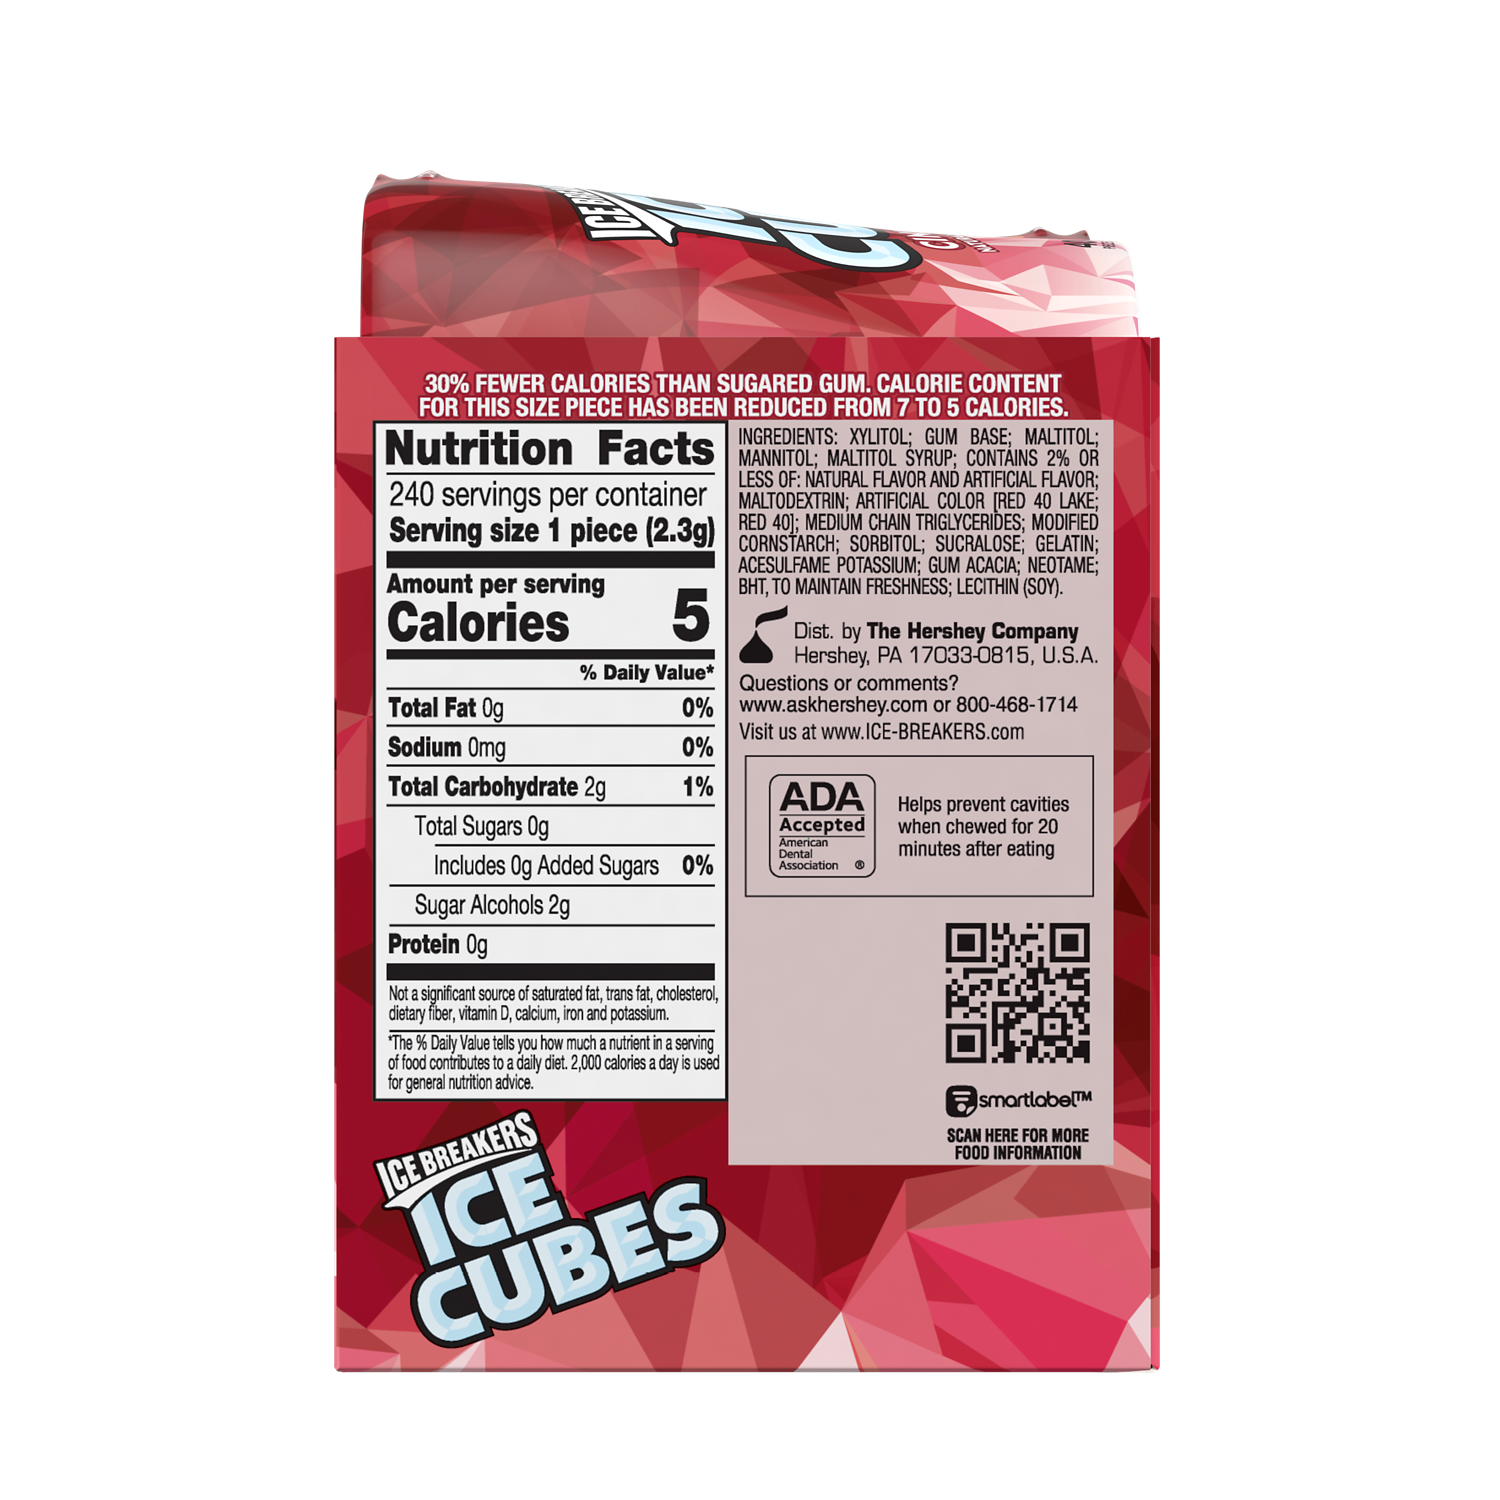 ICE BREAKERS ICE CUBES Cinnamon Sugar Free Gum, 19.44 oz box, 6 pack - Back of Package